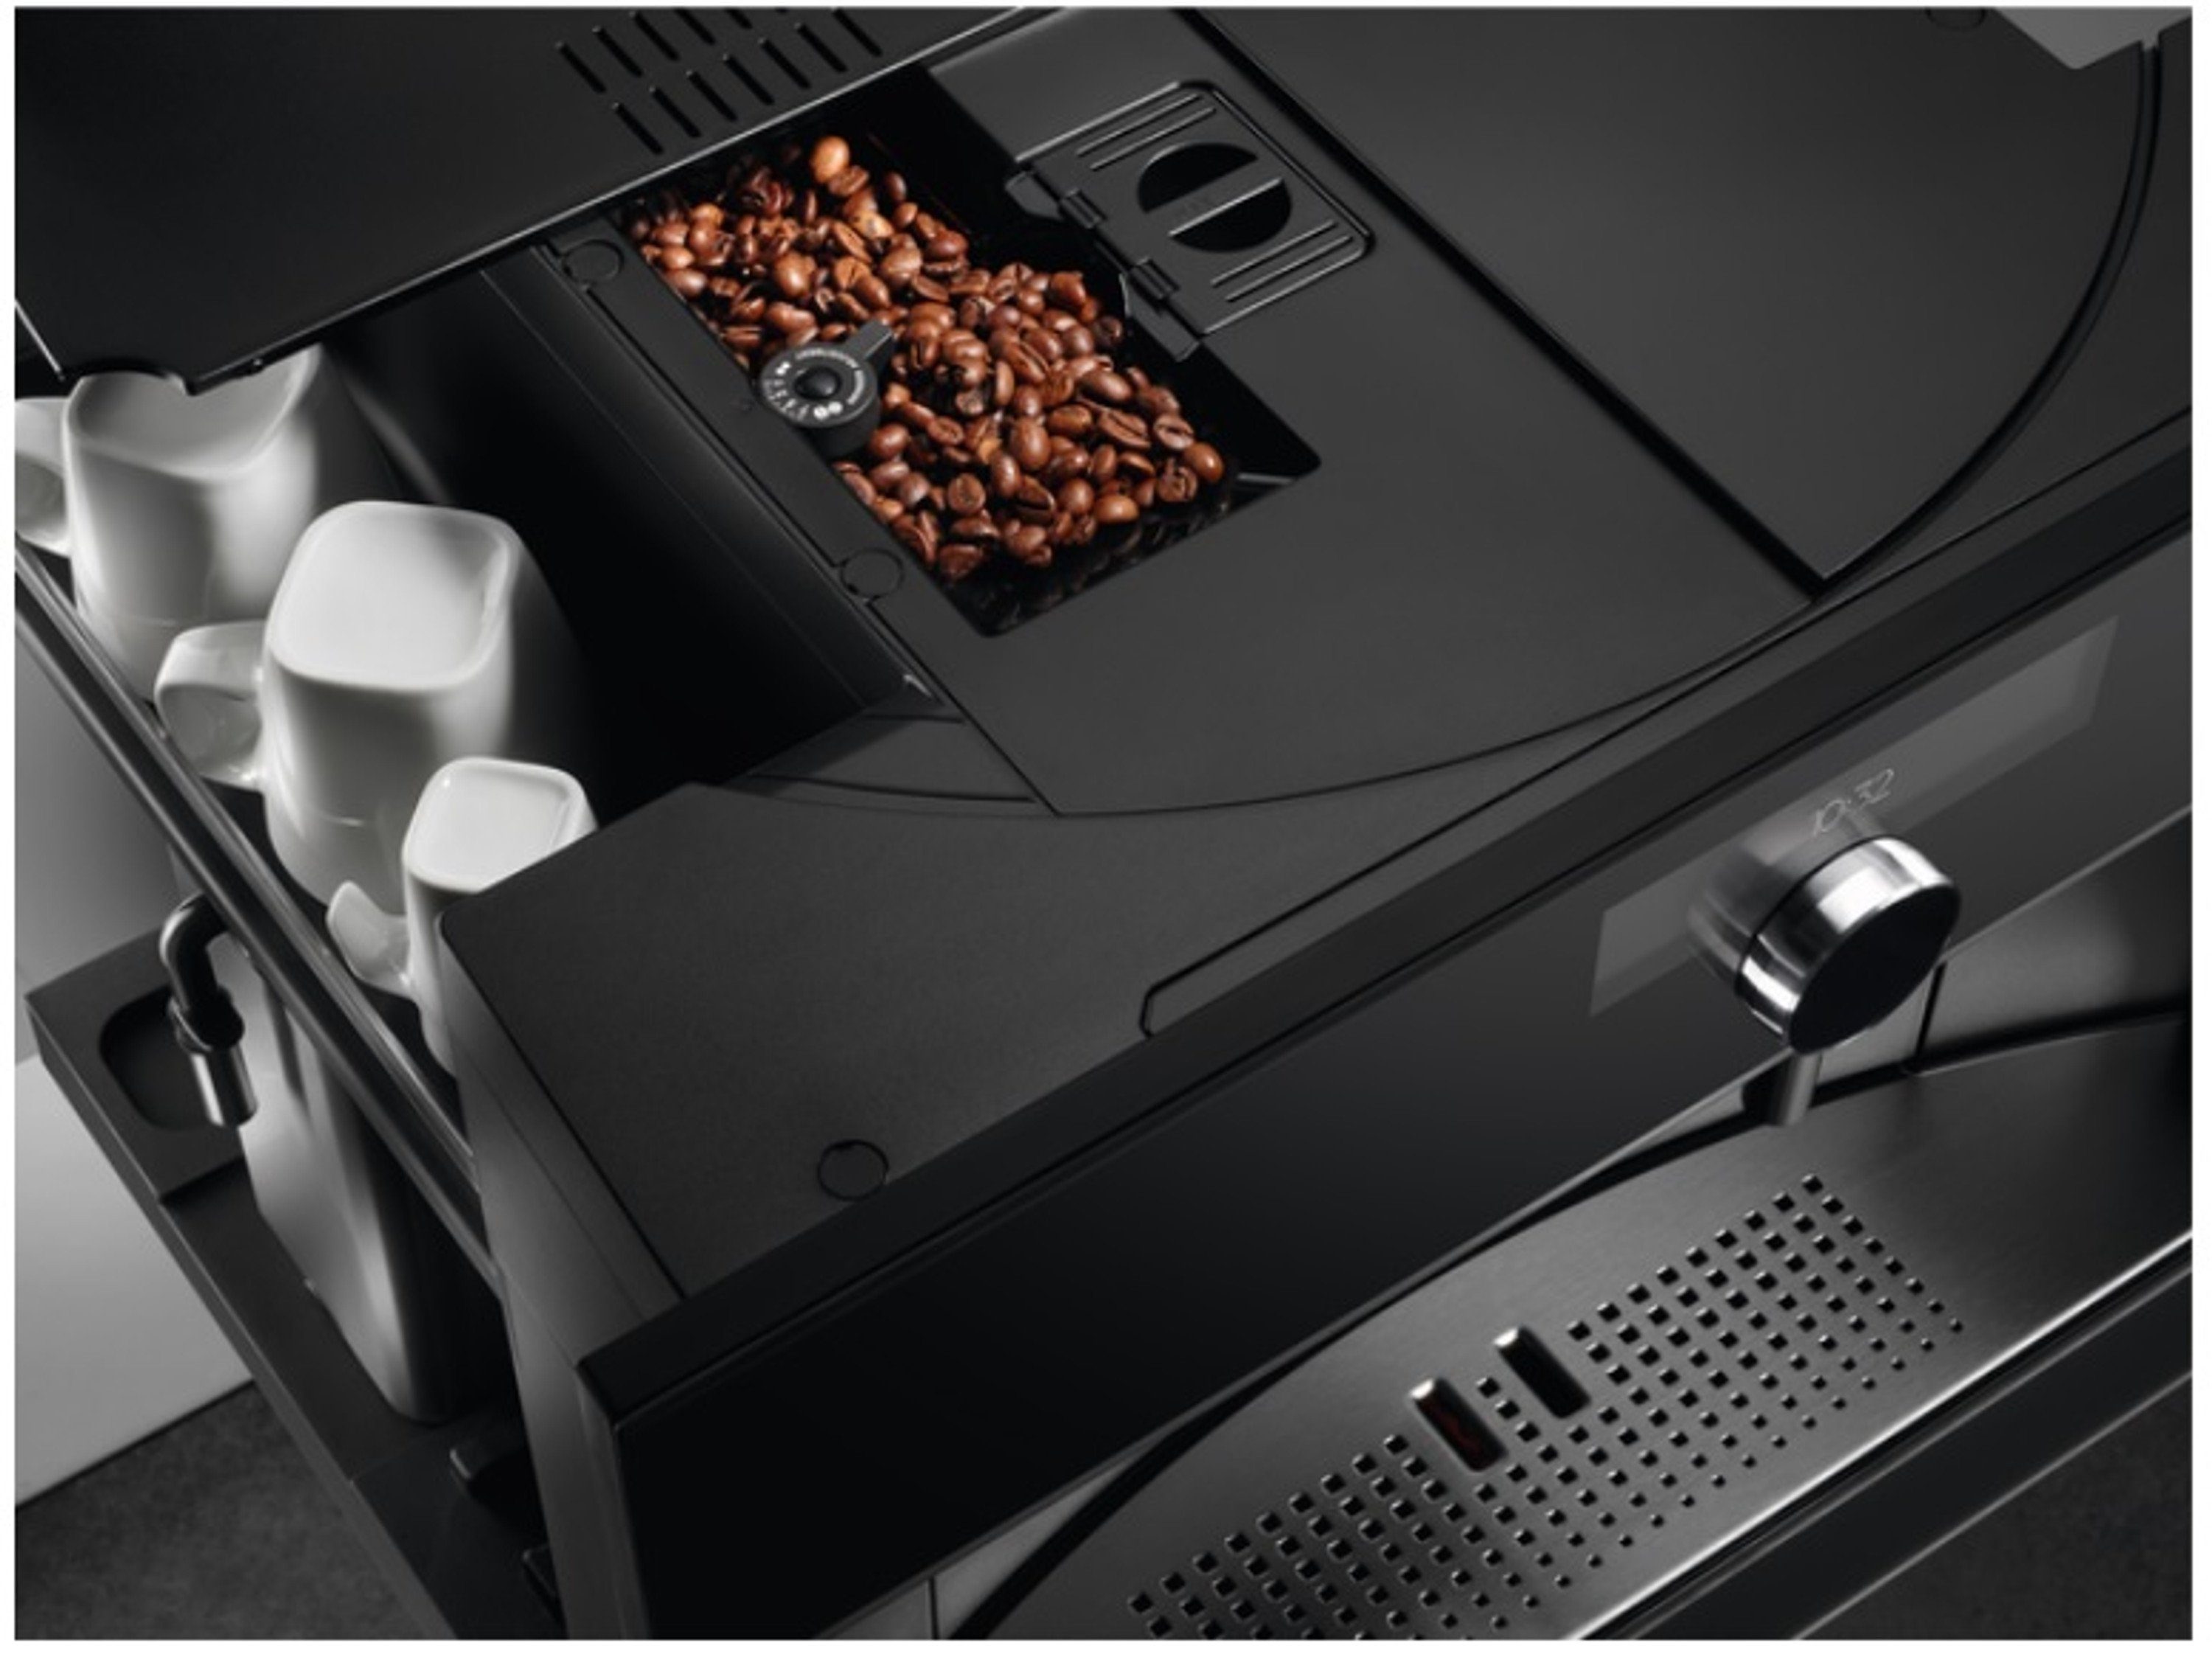 Einbau-Kaffeevollautomat KKK994500B, AEG Premium-Drehwähler Berührungssensor TFT-Farbdisplay mit und